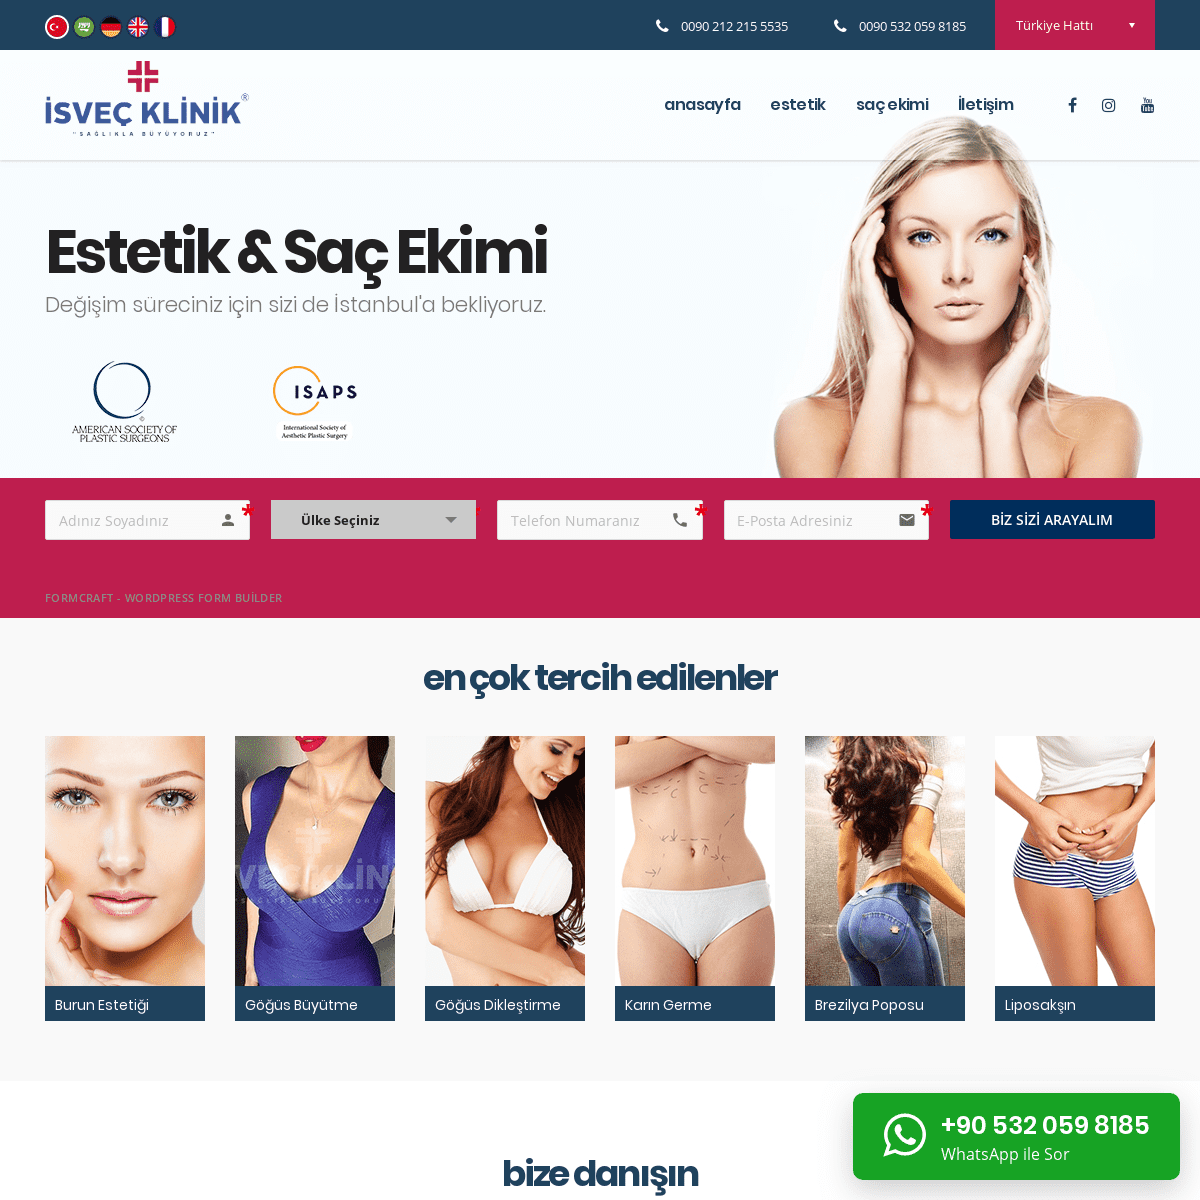 A complete backup of isvecklinik.com